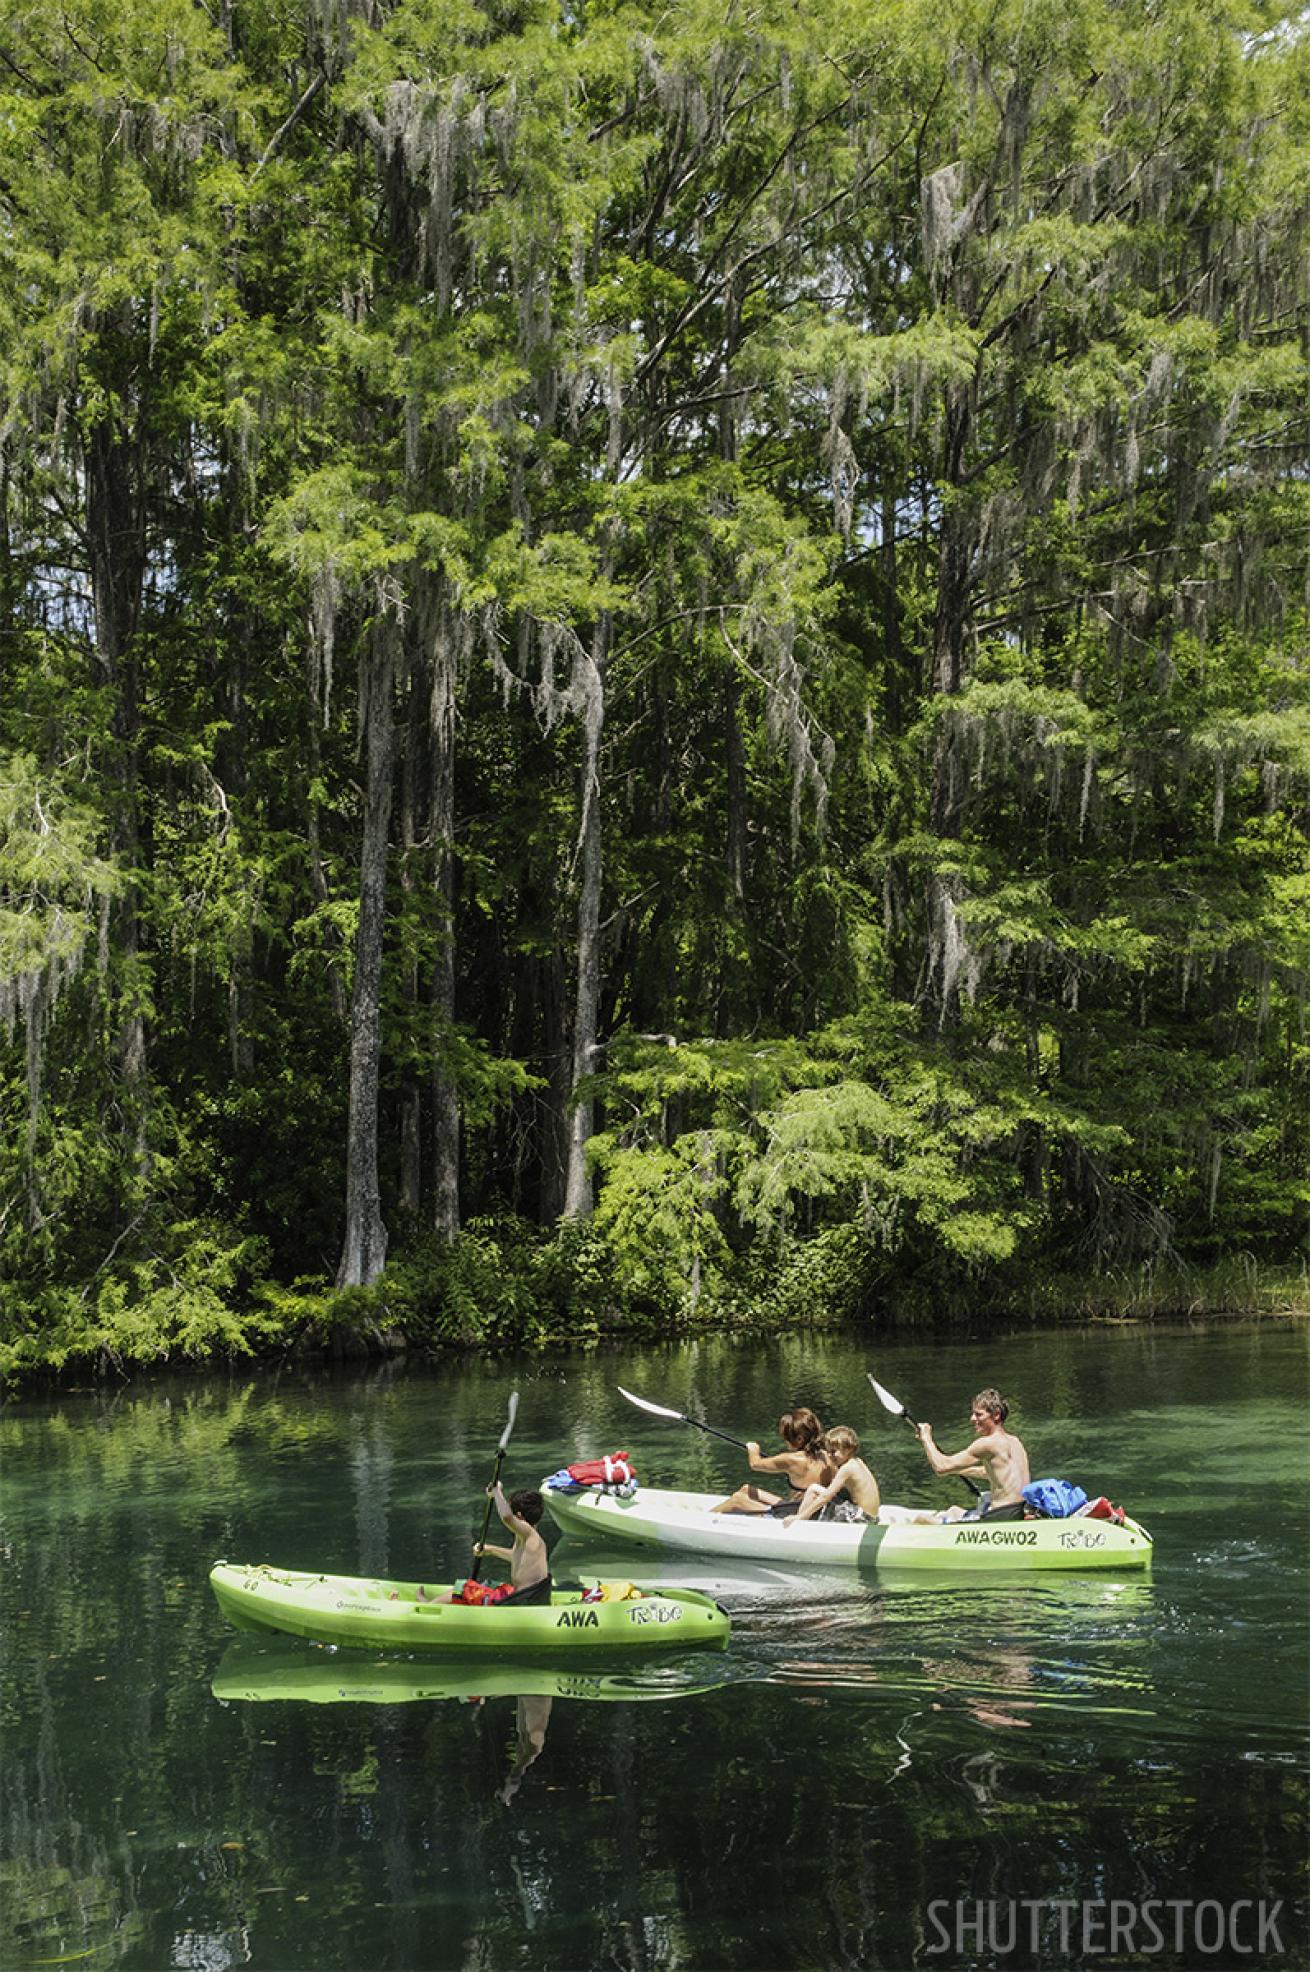 Kayaking on Crystal River, Florida with manatees